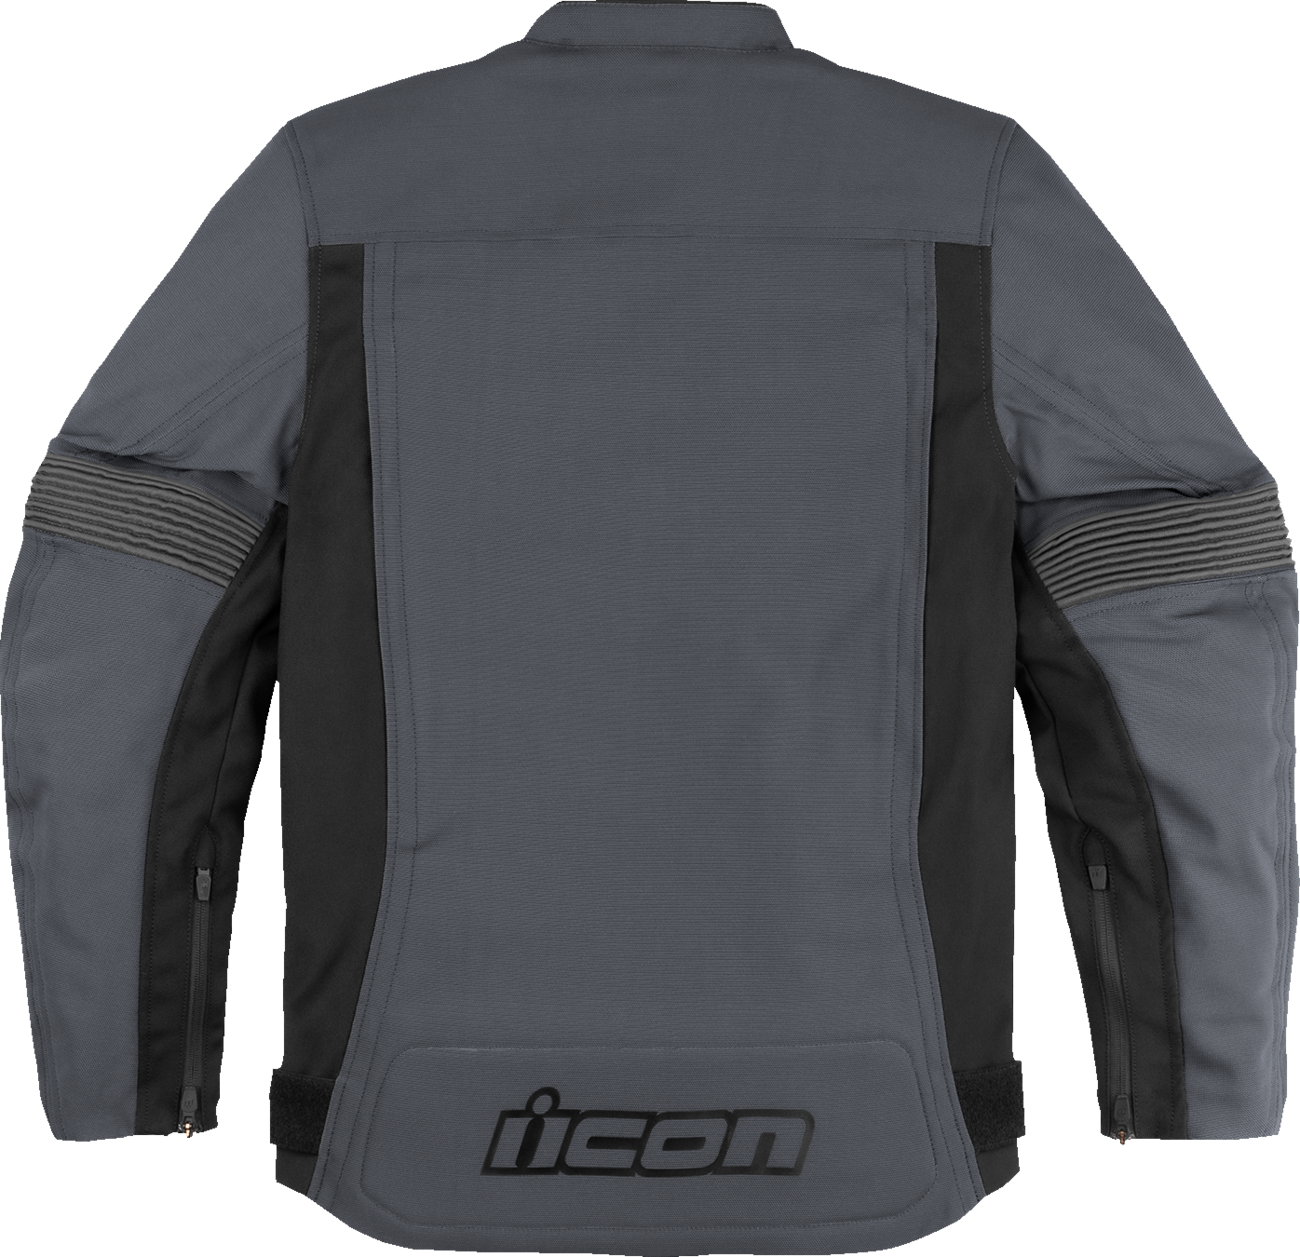 ICON Slabtown Jacket - Gray - Medium 2820-6255